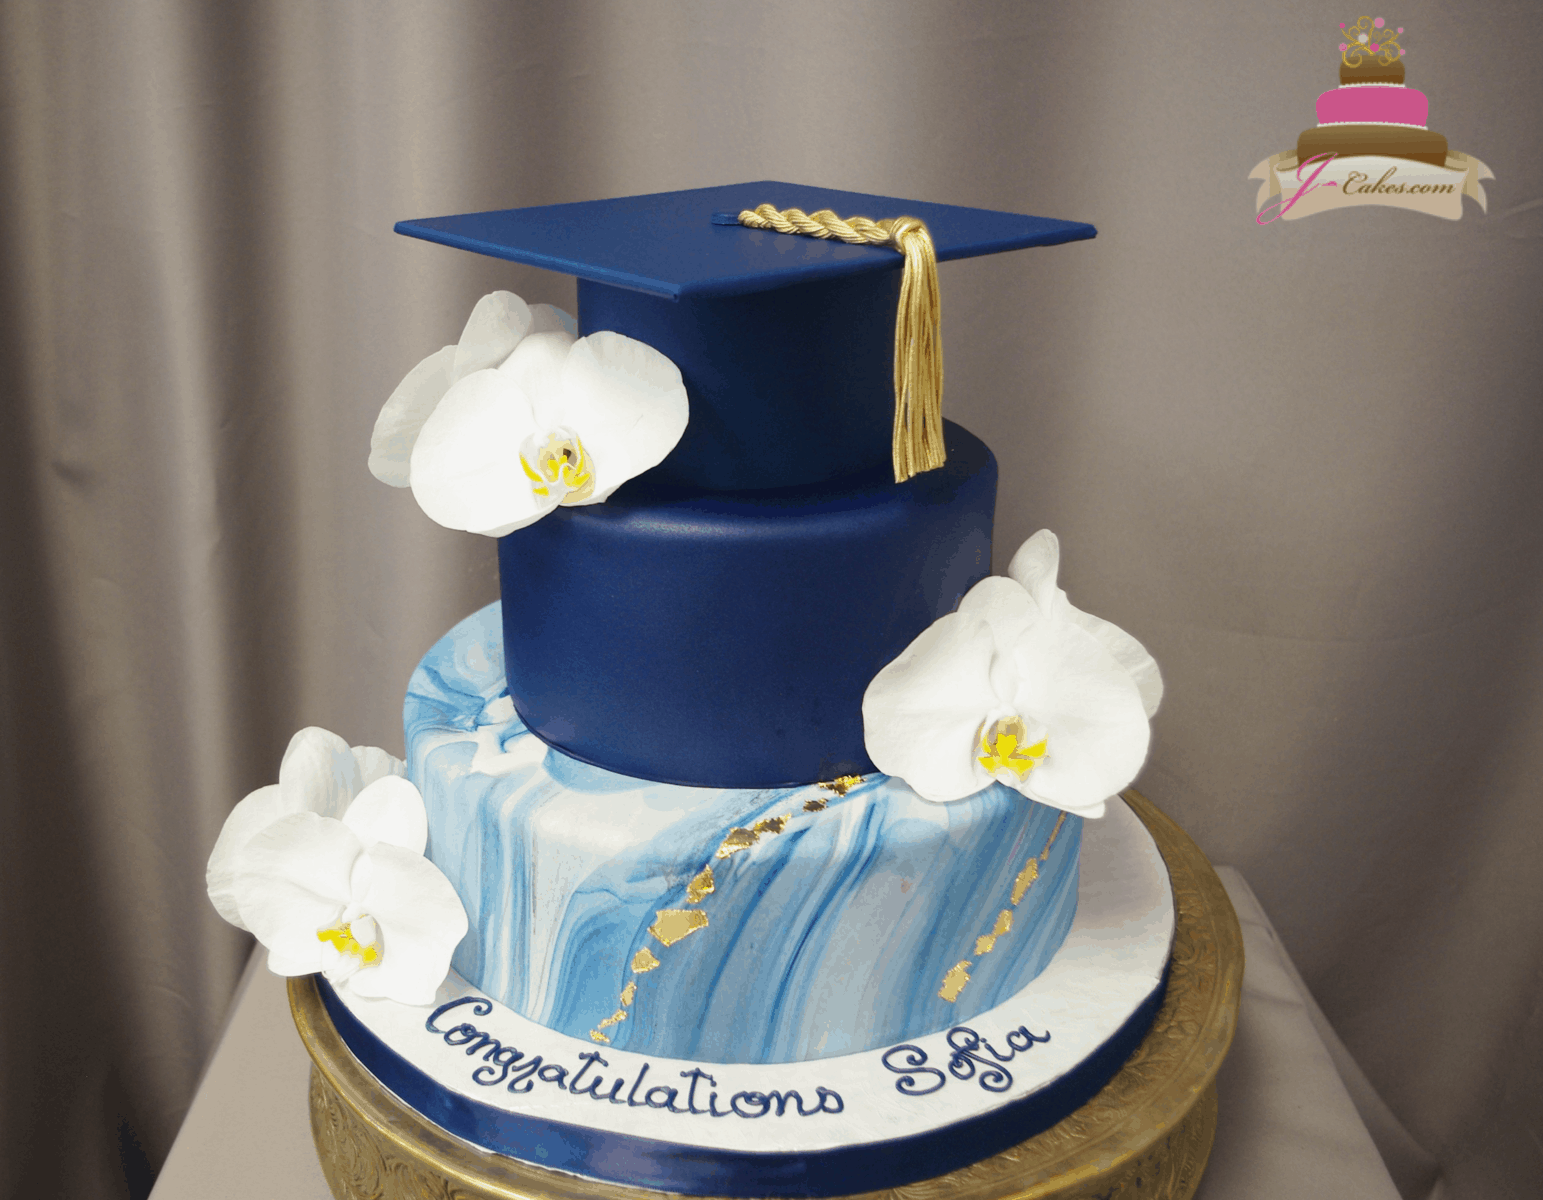 Graduation Cake | Close up view | K's fondant Cakes | Flickr